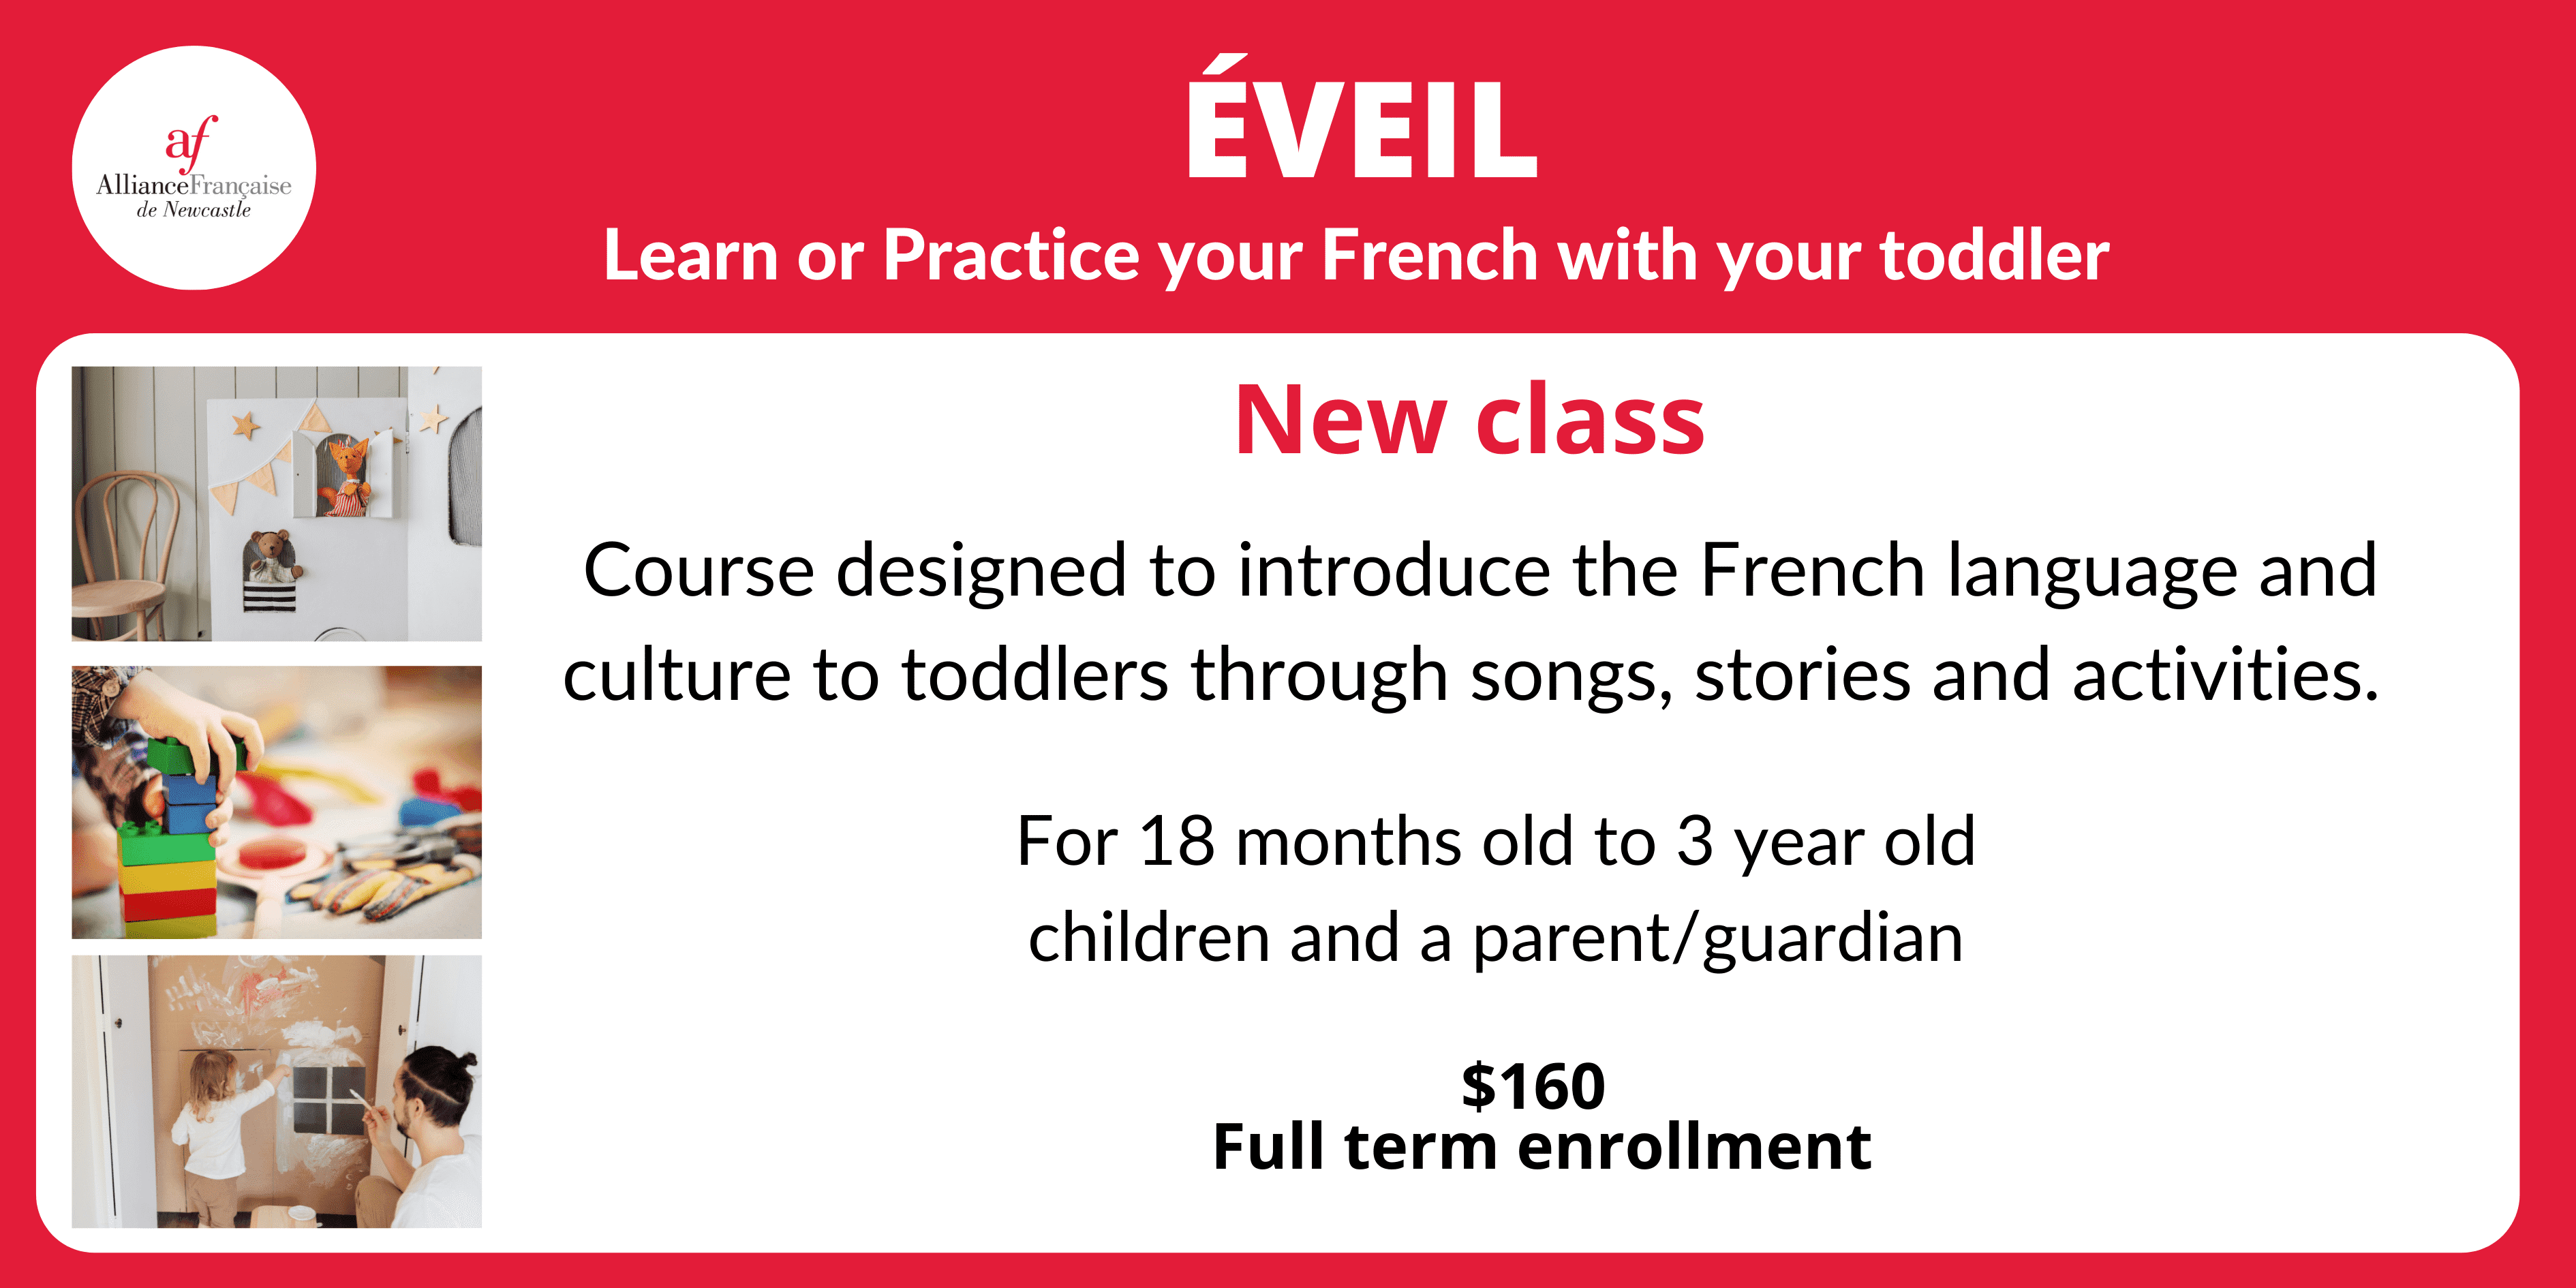 Eveil - New course